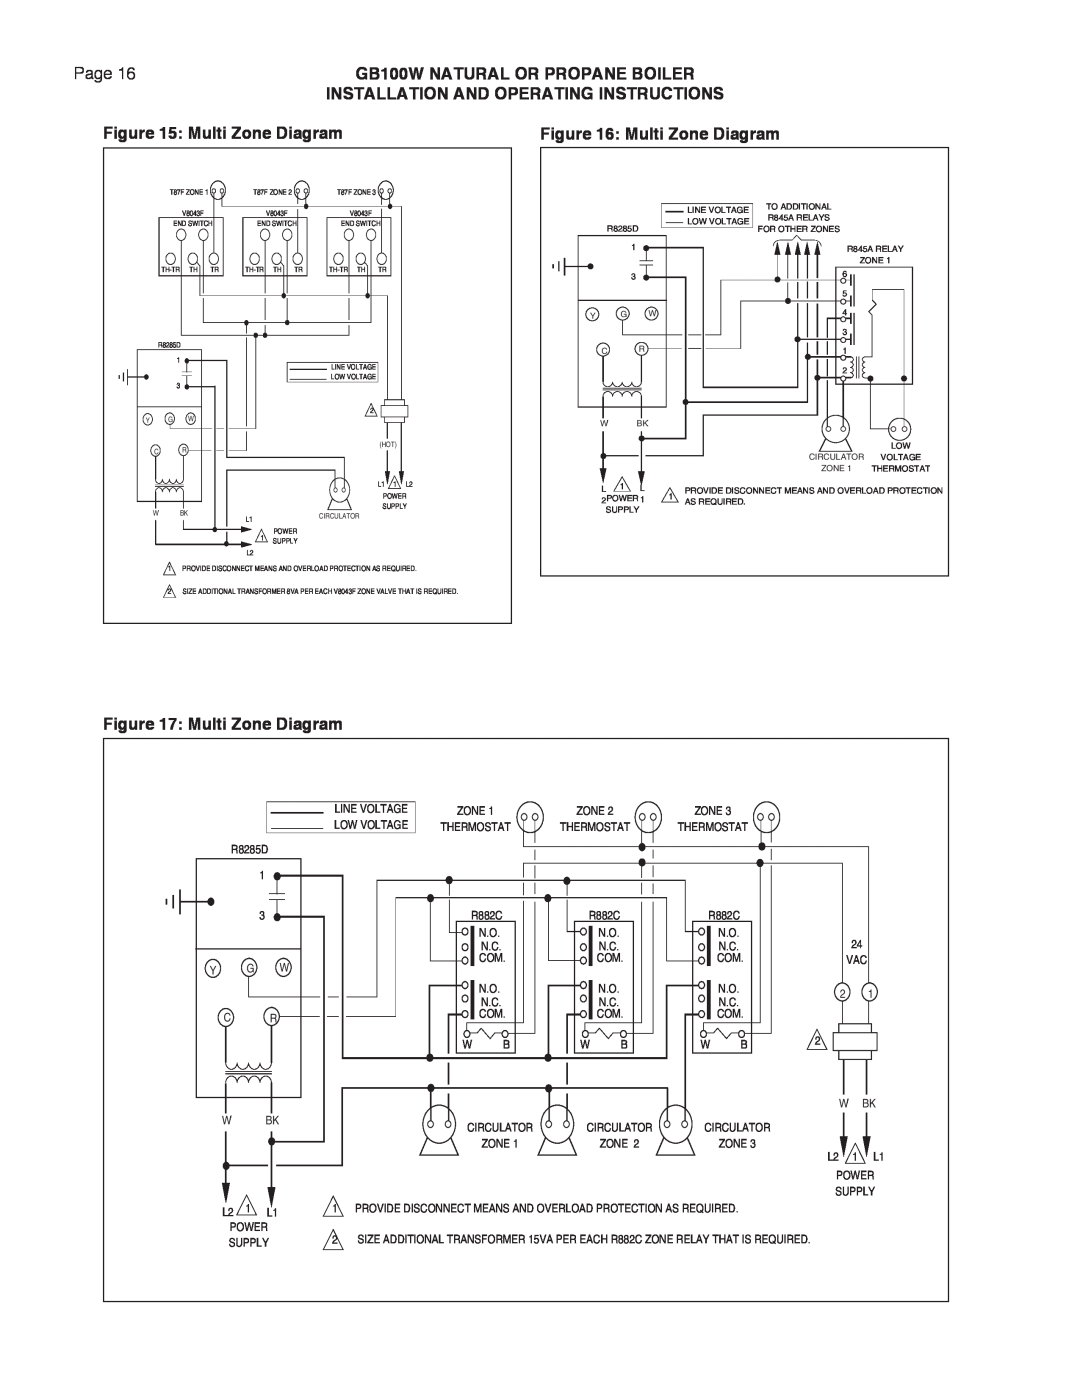 Smith Cast Iron Boilers manual Page, Multi Zone Diagram, GB100W NATURAL OR PROPANE BOILER 